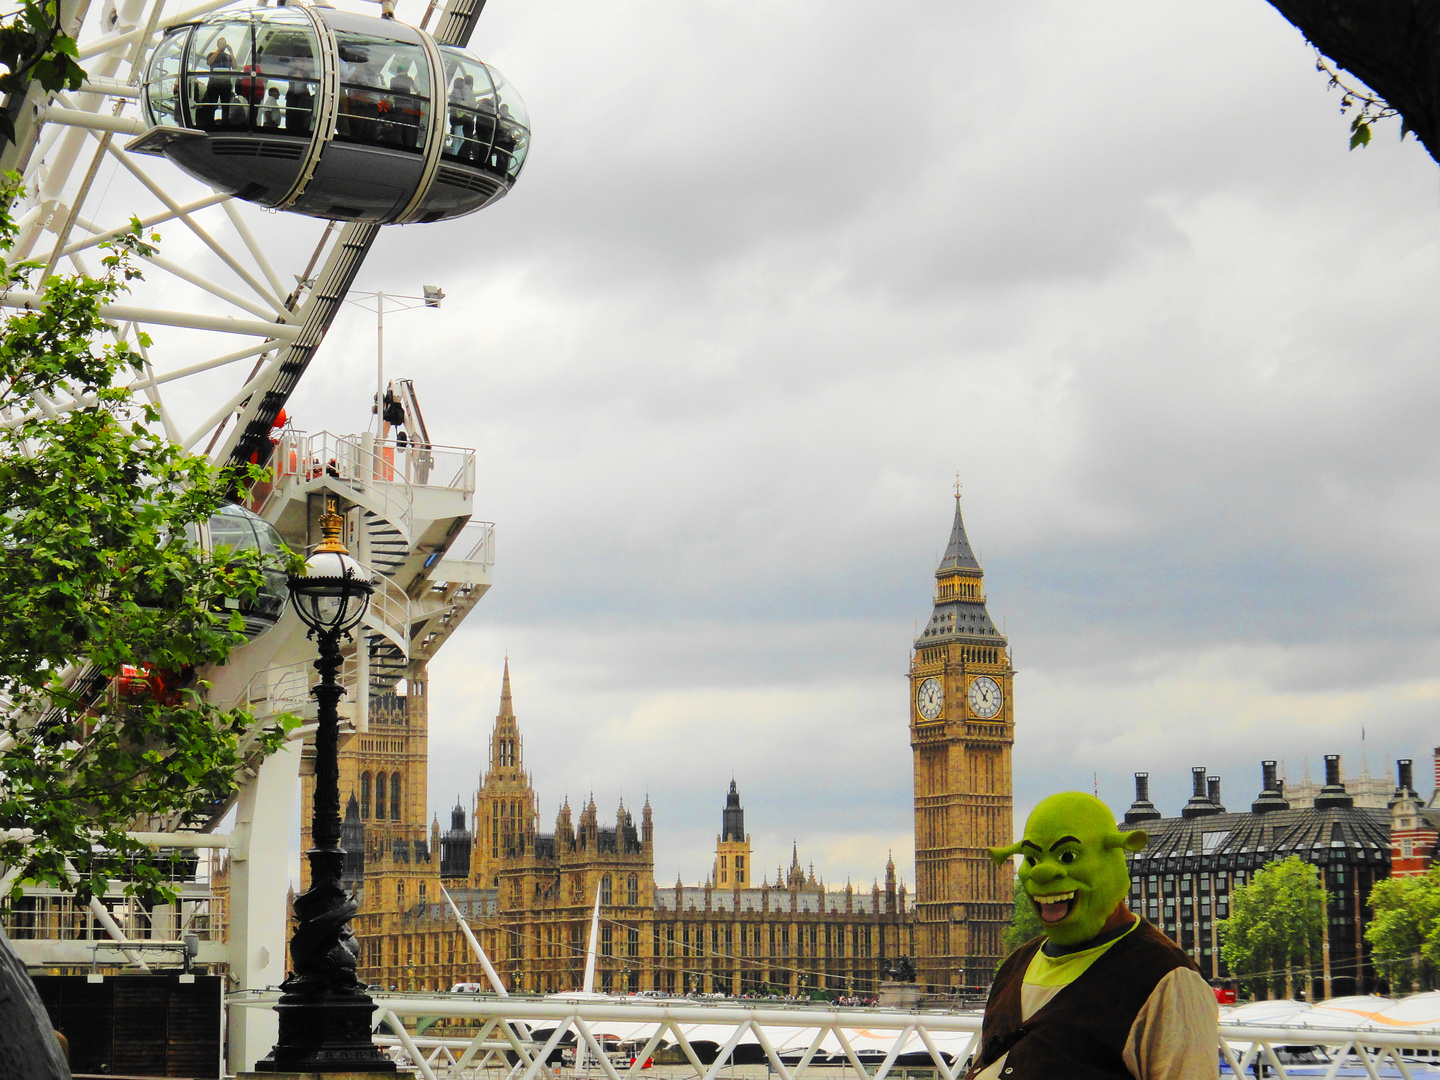 Shrek in London